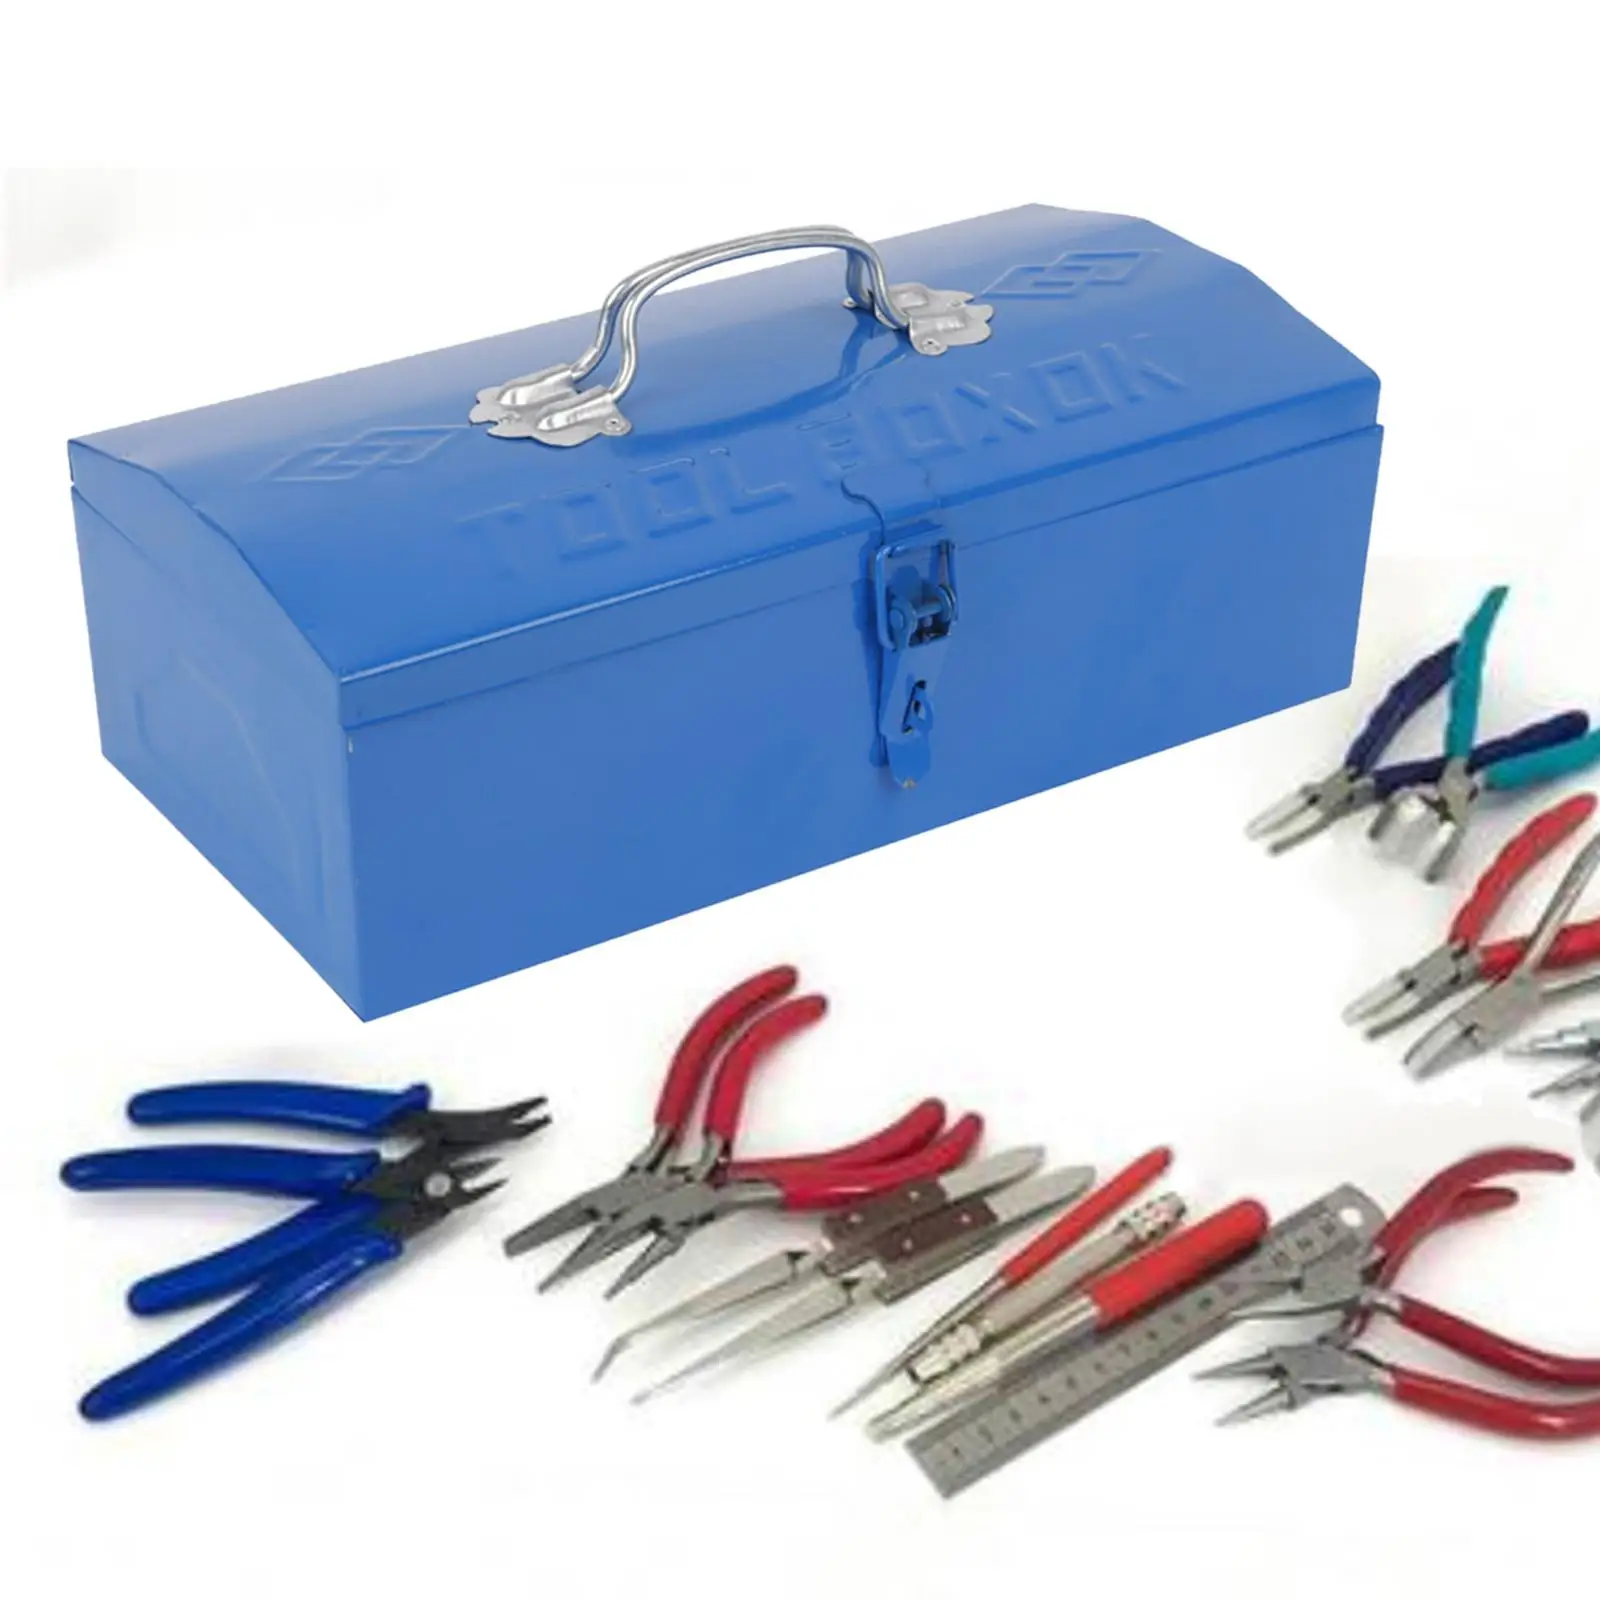 Repair Tool Storage Box Heavy Duty Latch Closure with Folding Handle Multipurpose Large Capacity Metal Tool Box for Garage Home